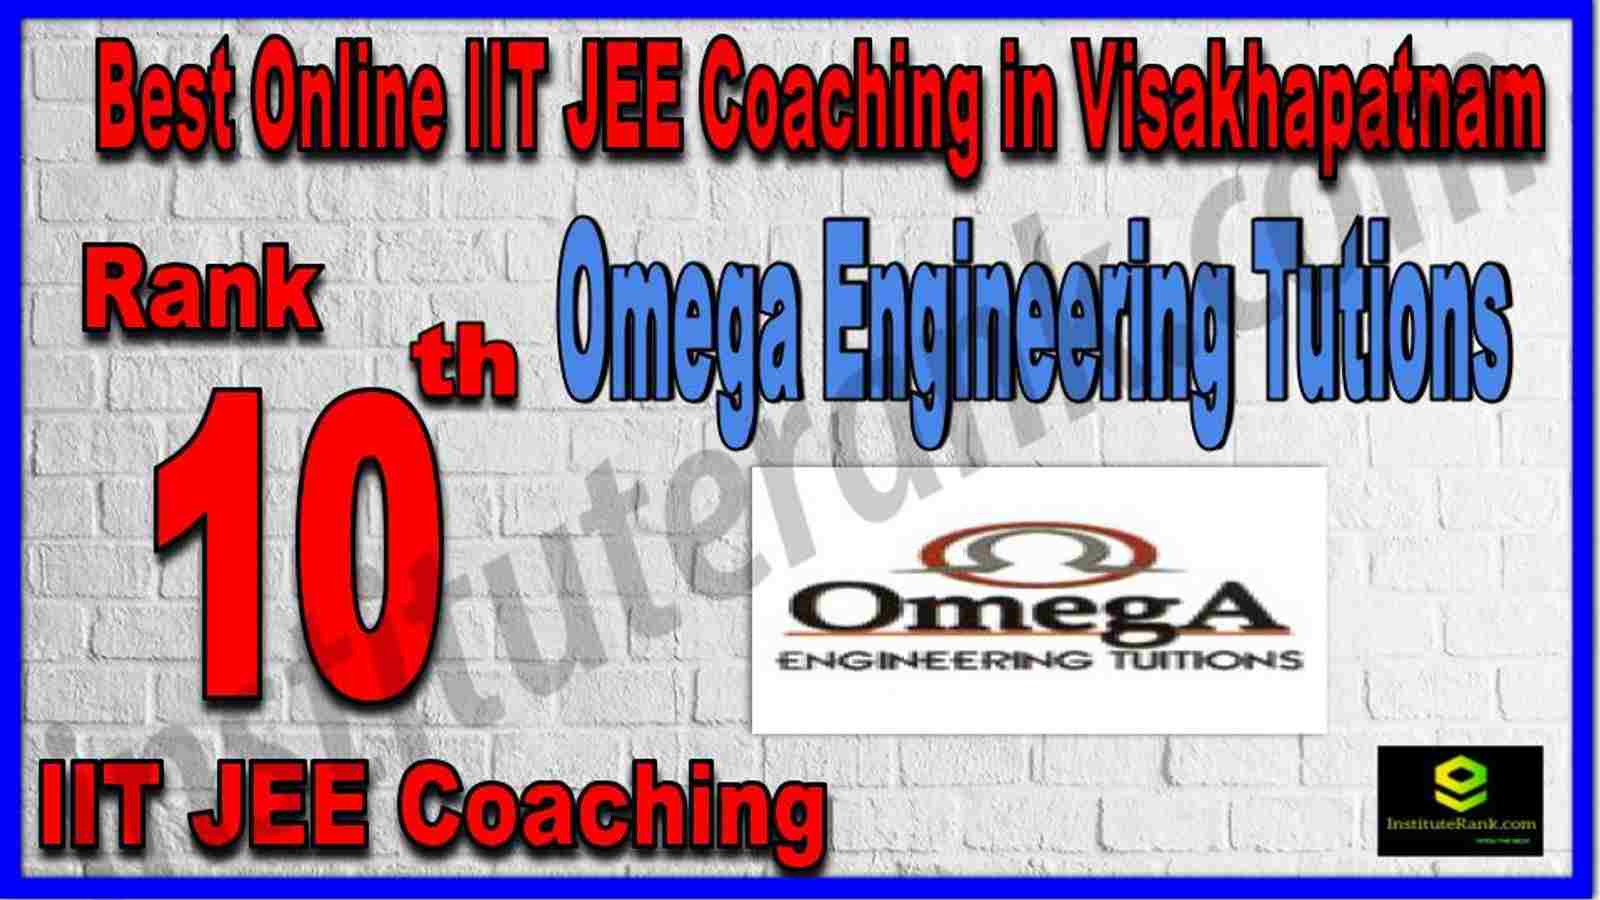 Rank 10th Best Online IIT JEE Coaching in Visakhapatnam